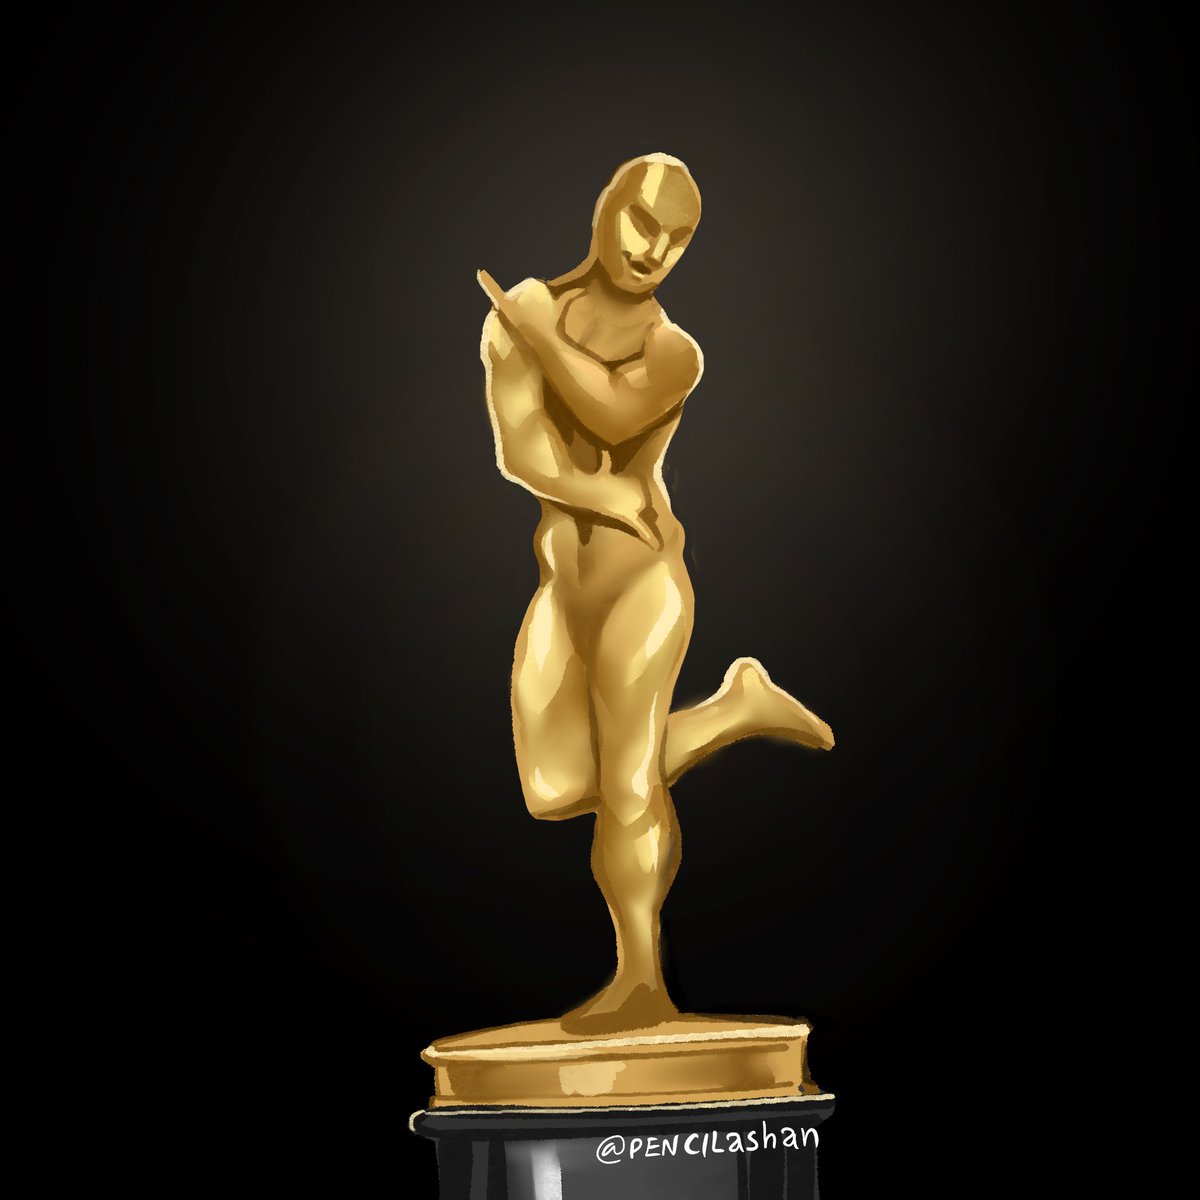 ‘Naatu Naatu' from 'RRR' wins the Oscar for Best Original Song! #Oscars  #Oscars95 #indianmovie #naatunaatu #rrr #indian #movie #cinema